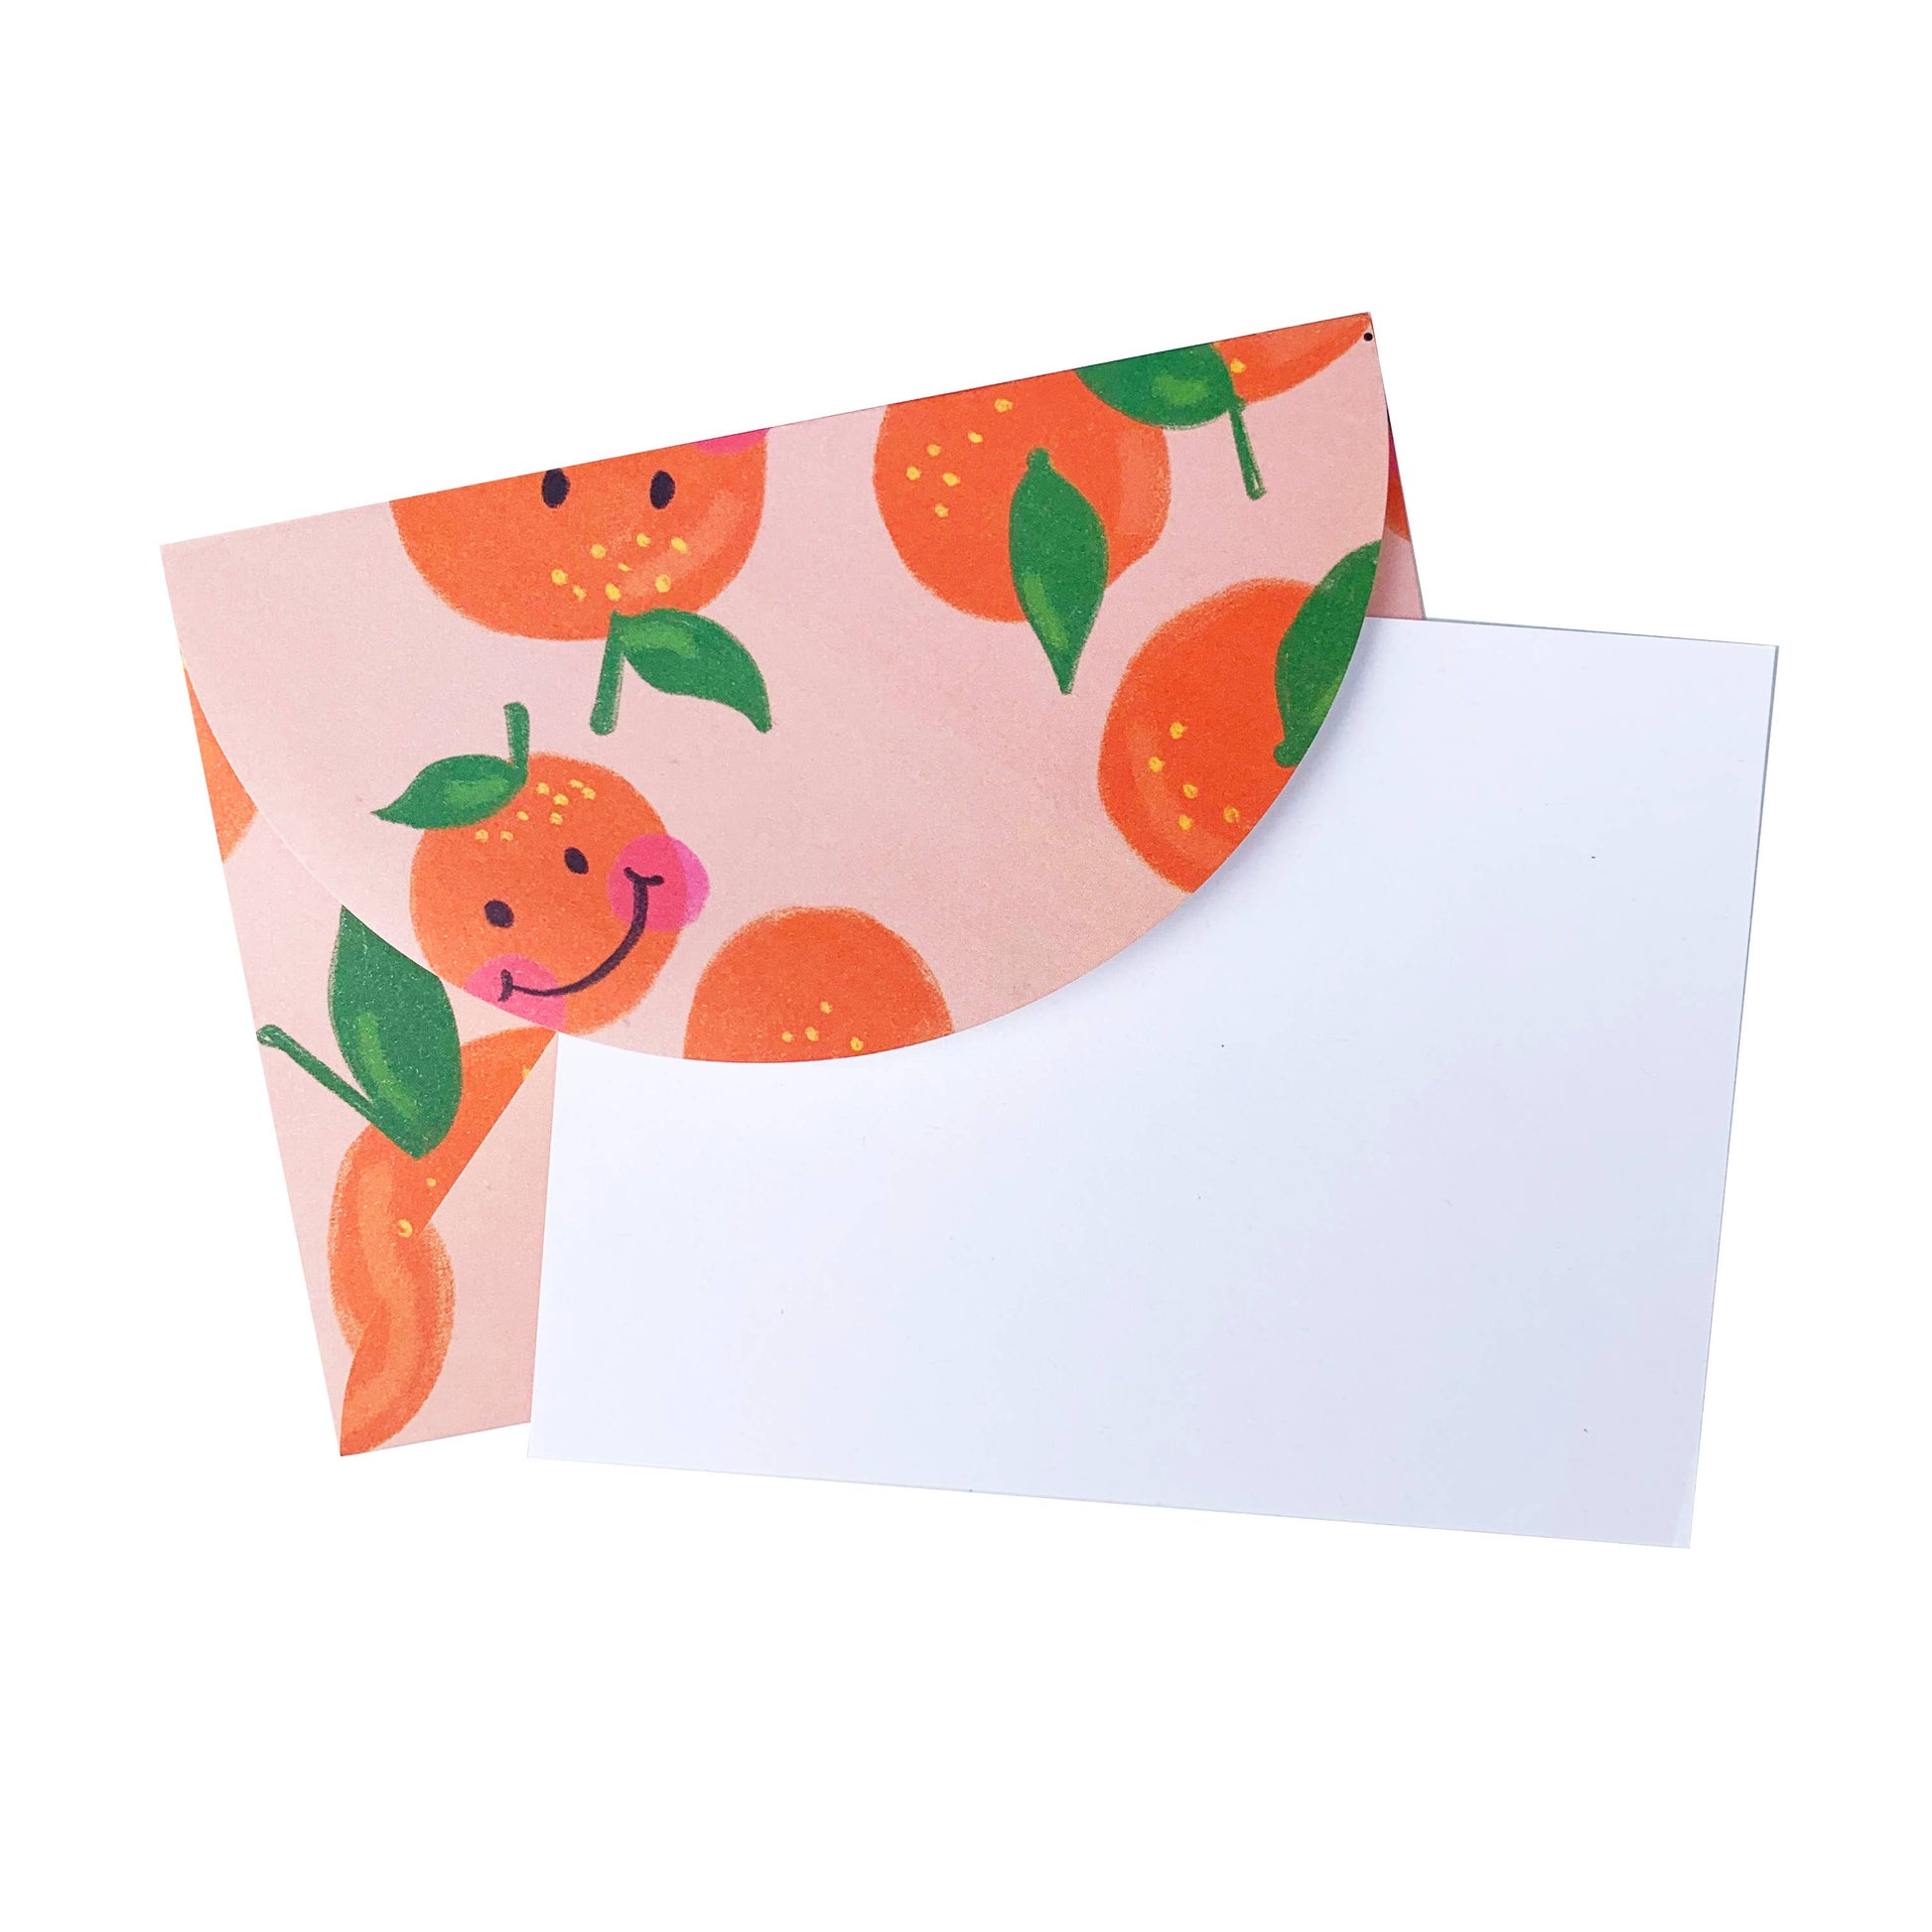 Smiley orange themed letter set 